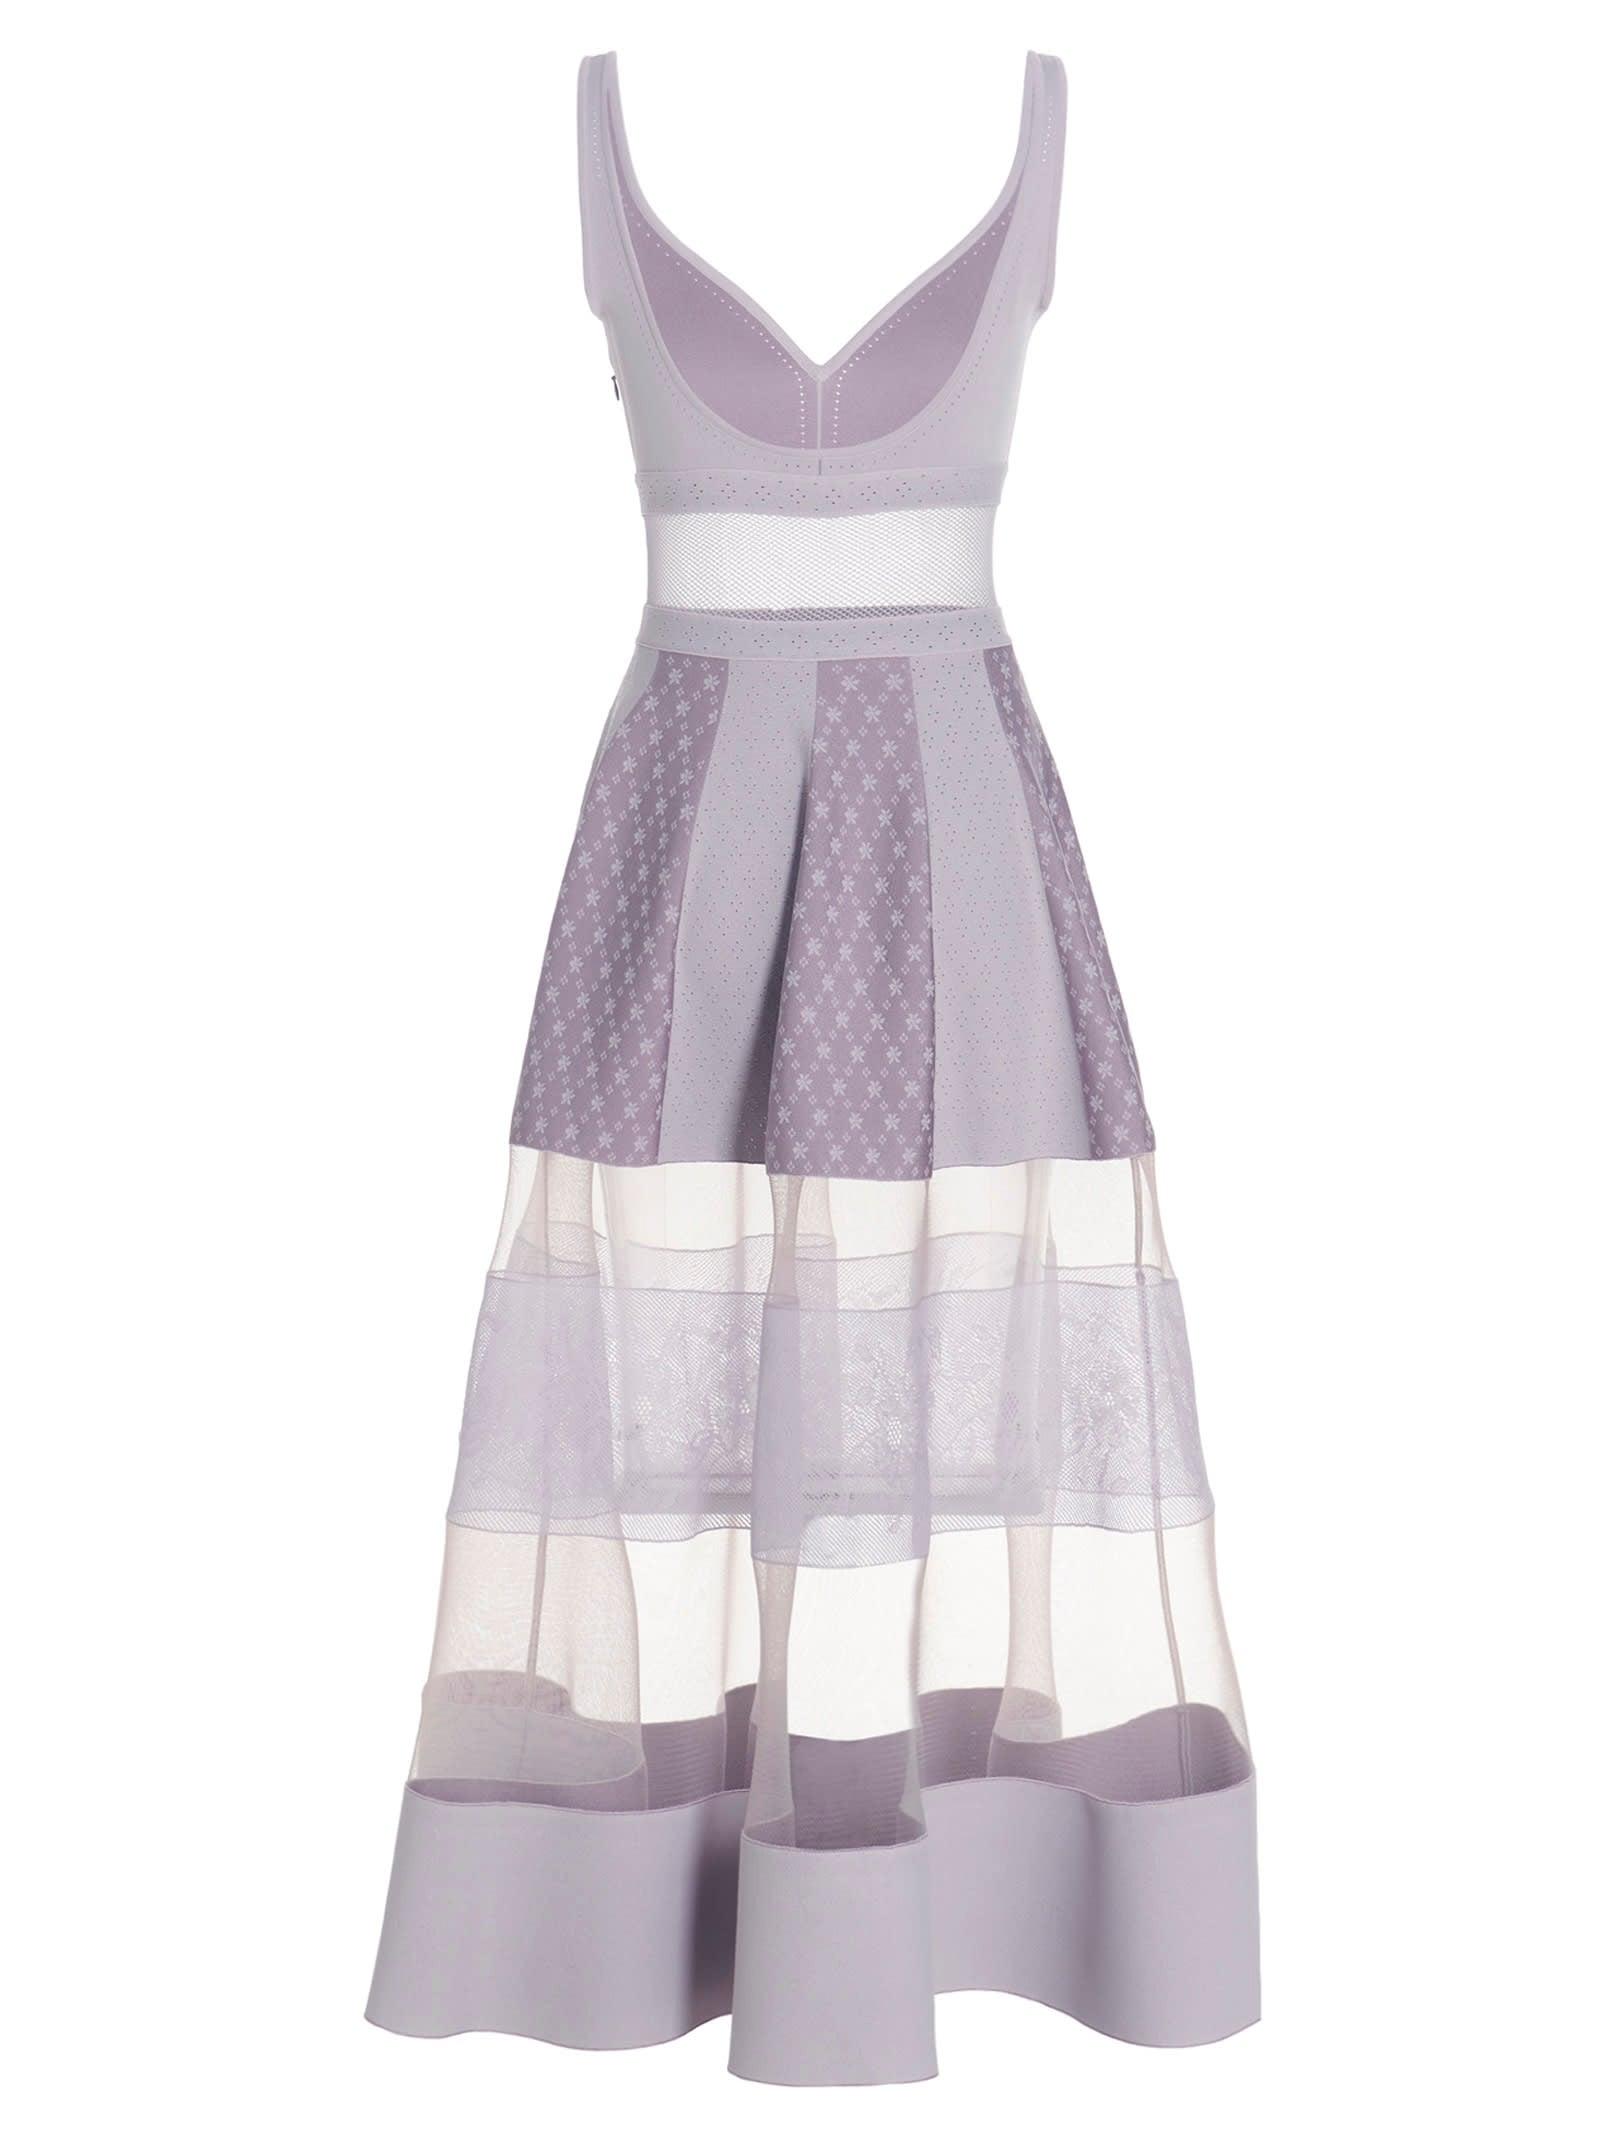 Alexander McQueen Synthetic Mesh Detail Dress - Women in Purple - Save 63%  | Lyst